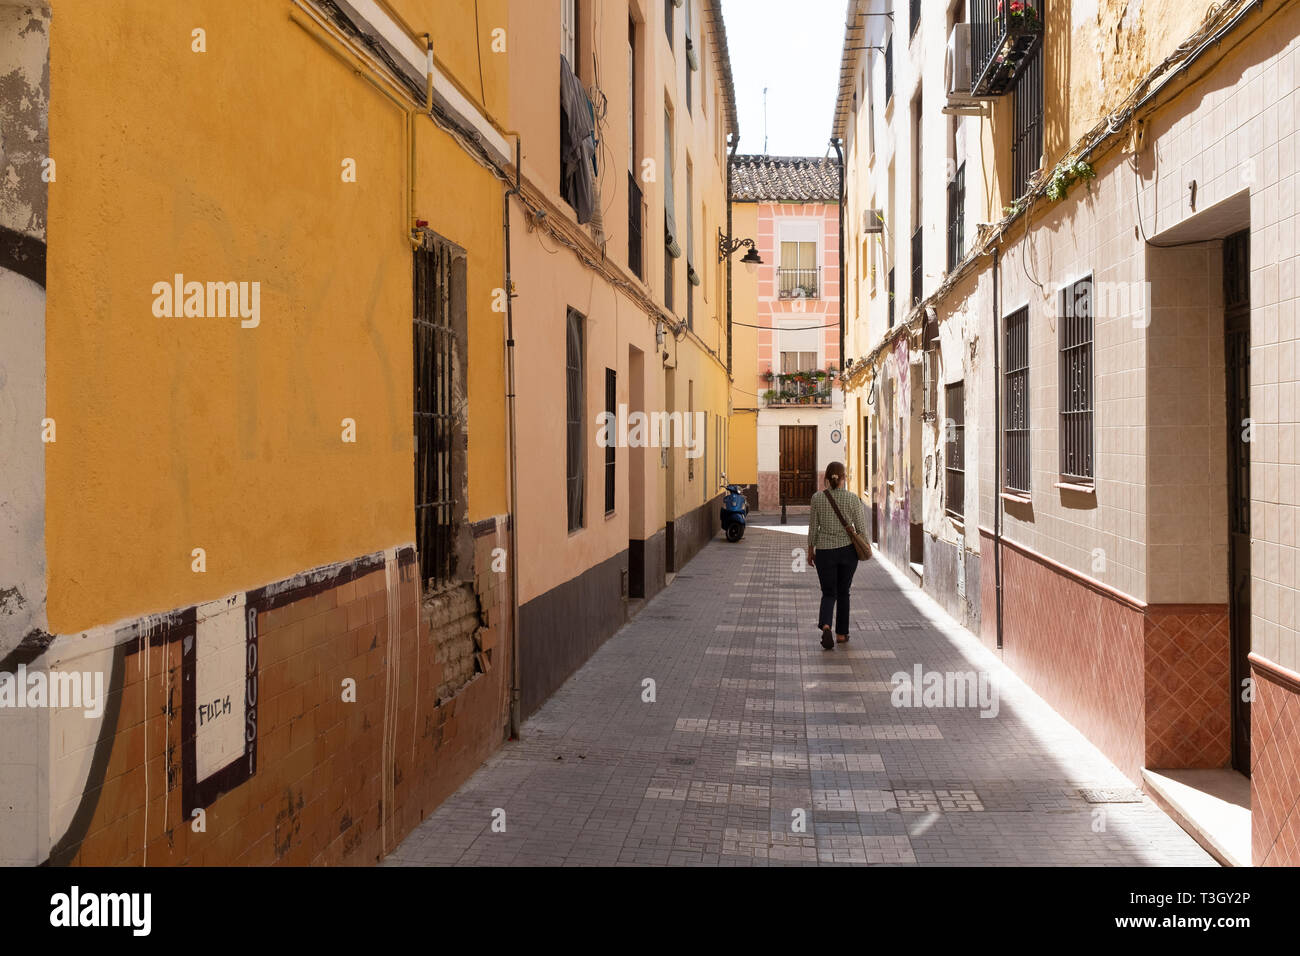 Female visitor walking alone down street in Malaga, Spain Stock Photo